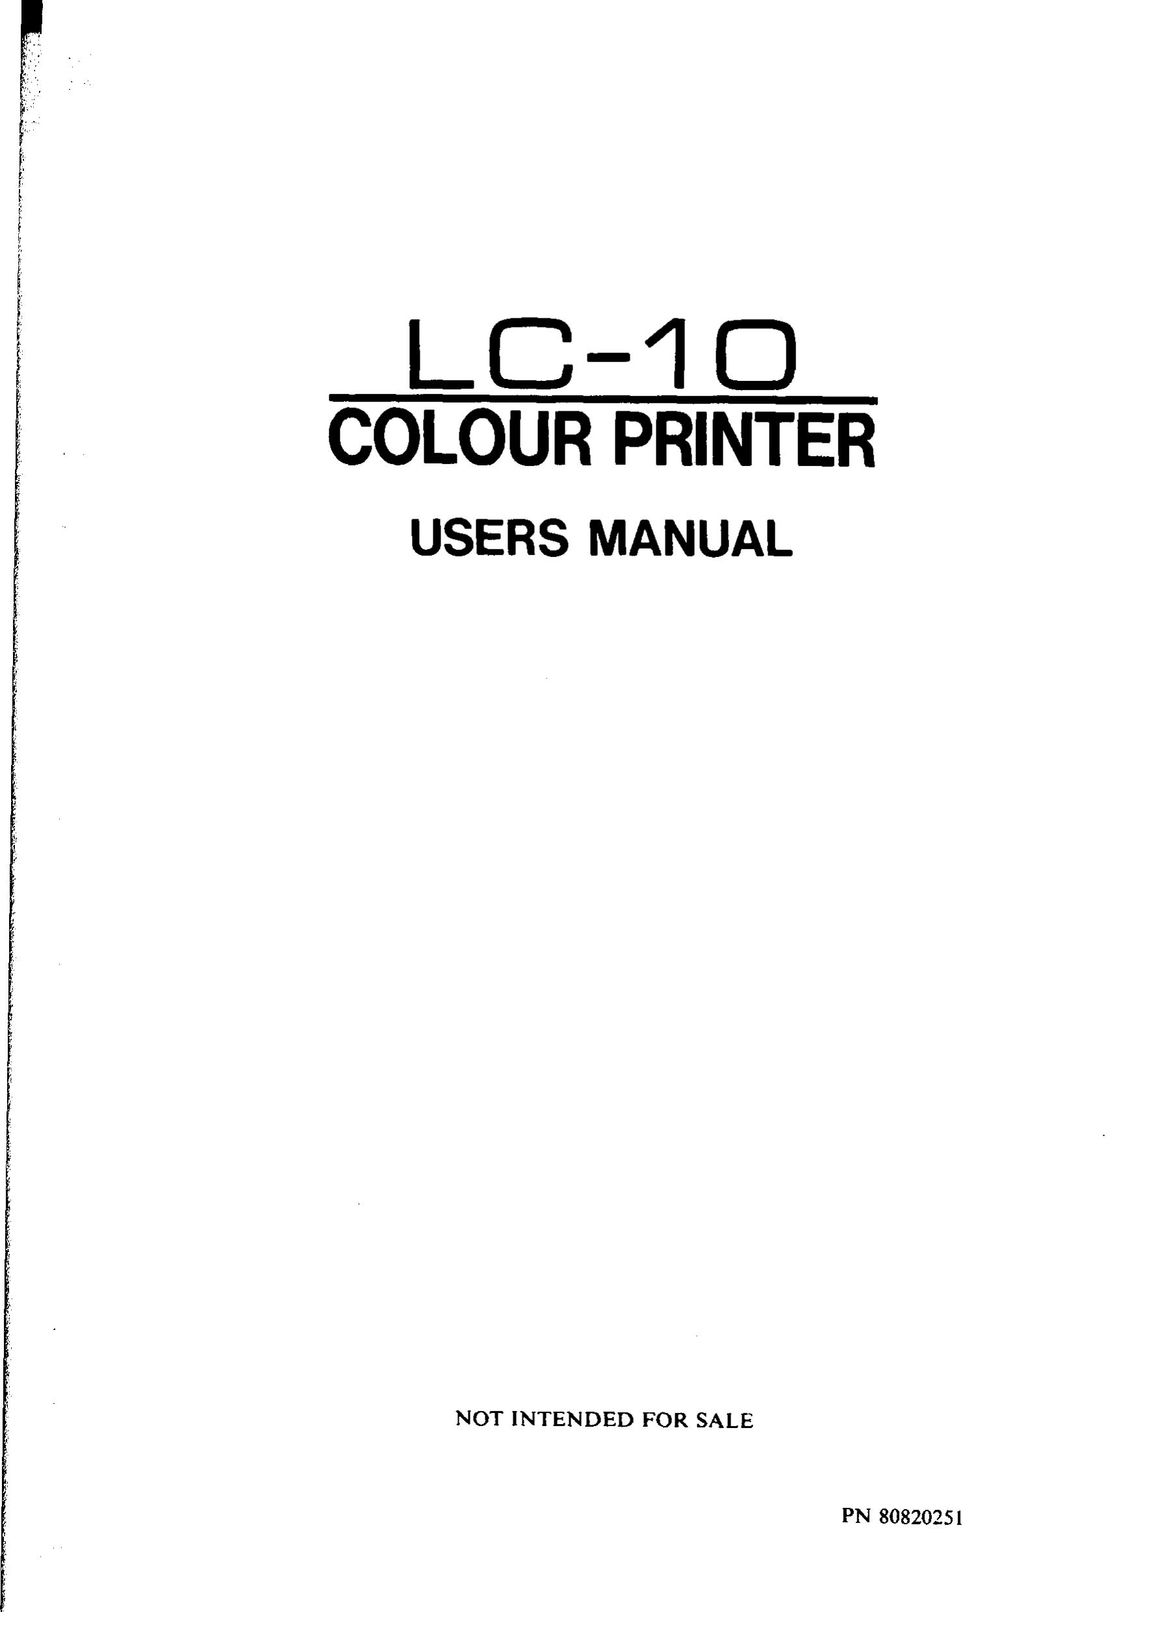 Star Micronics lC-10 Printer User Manual